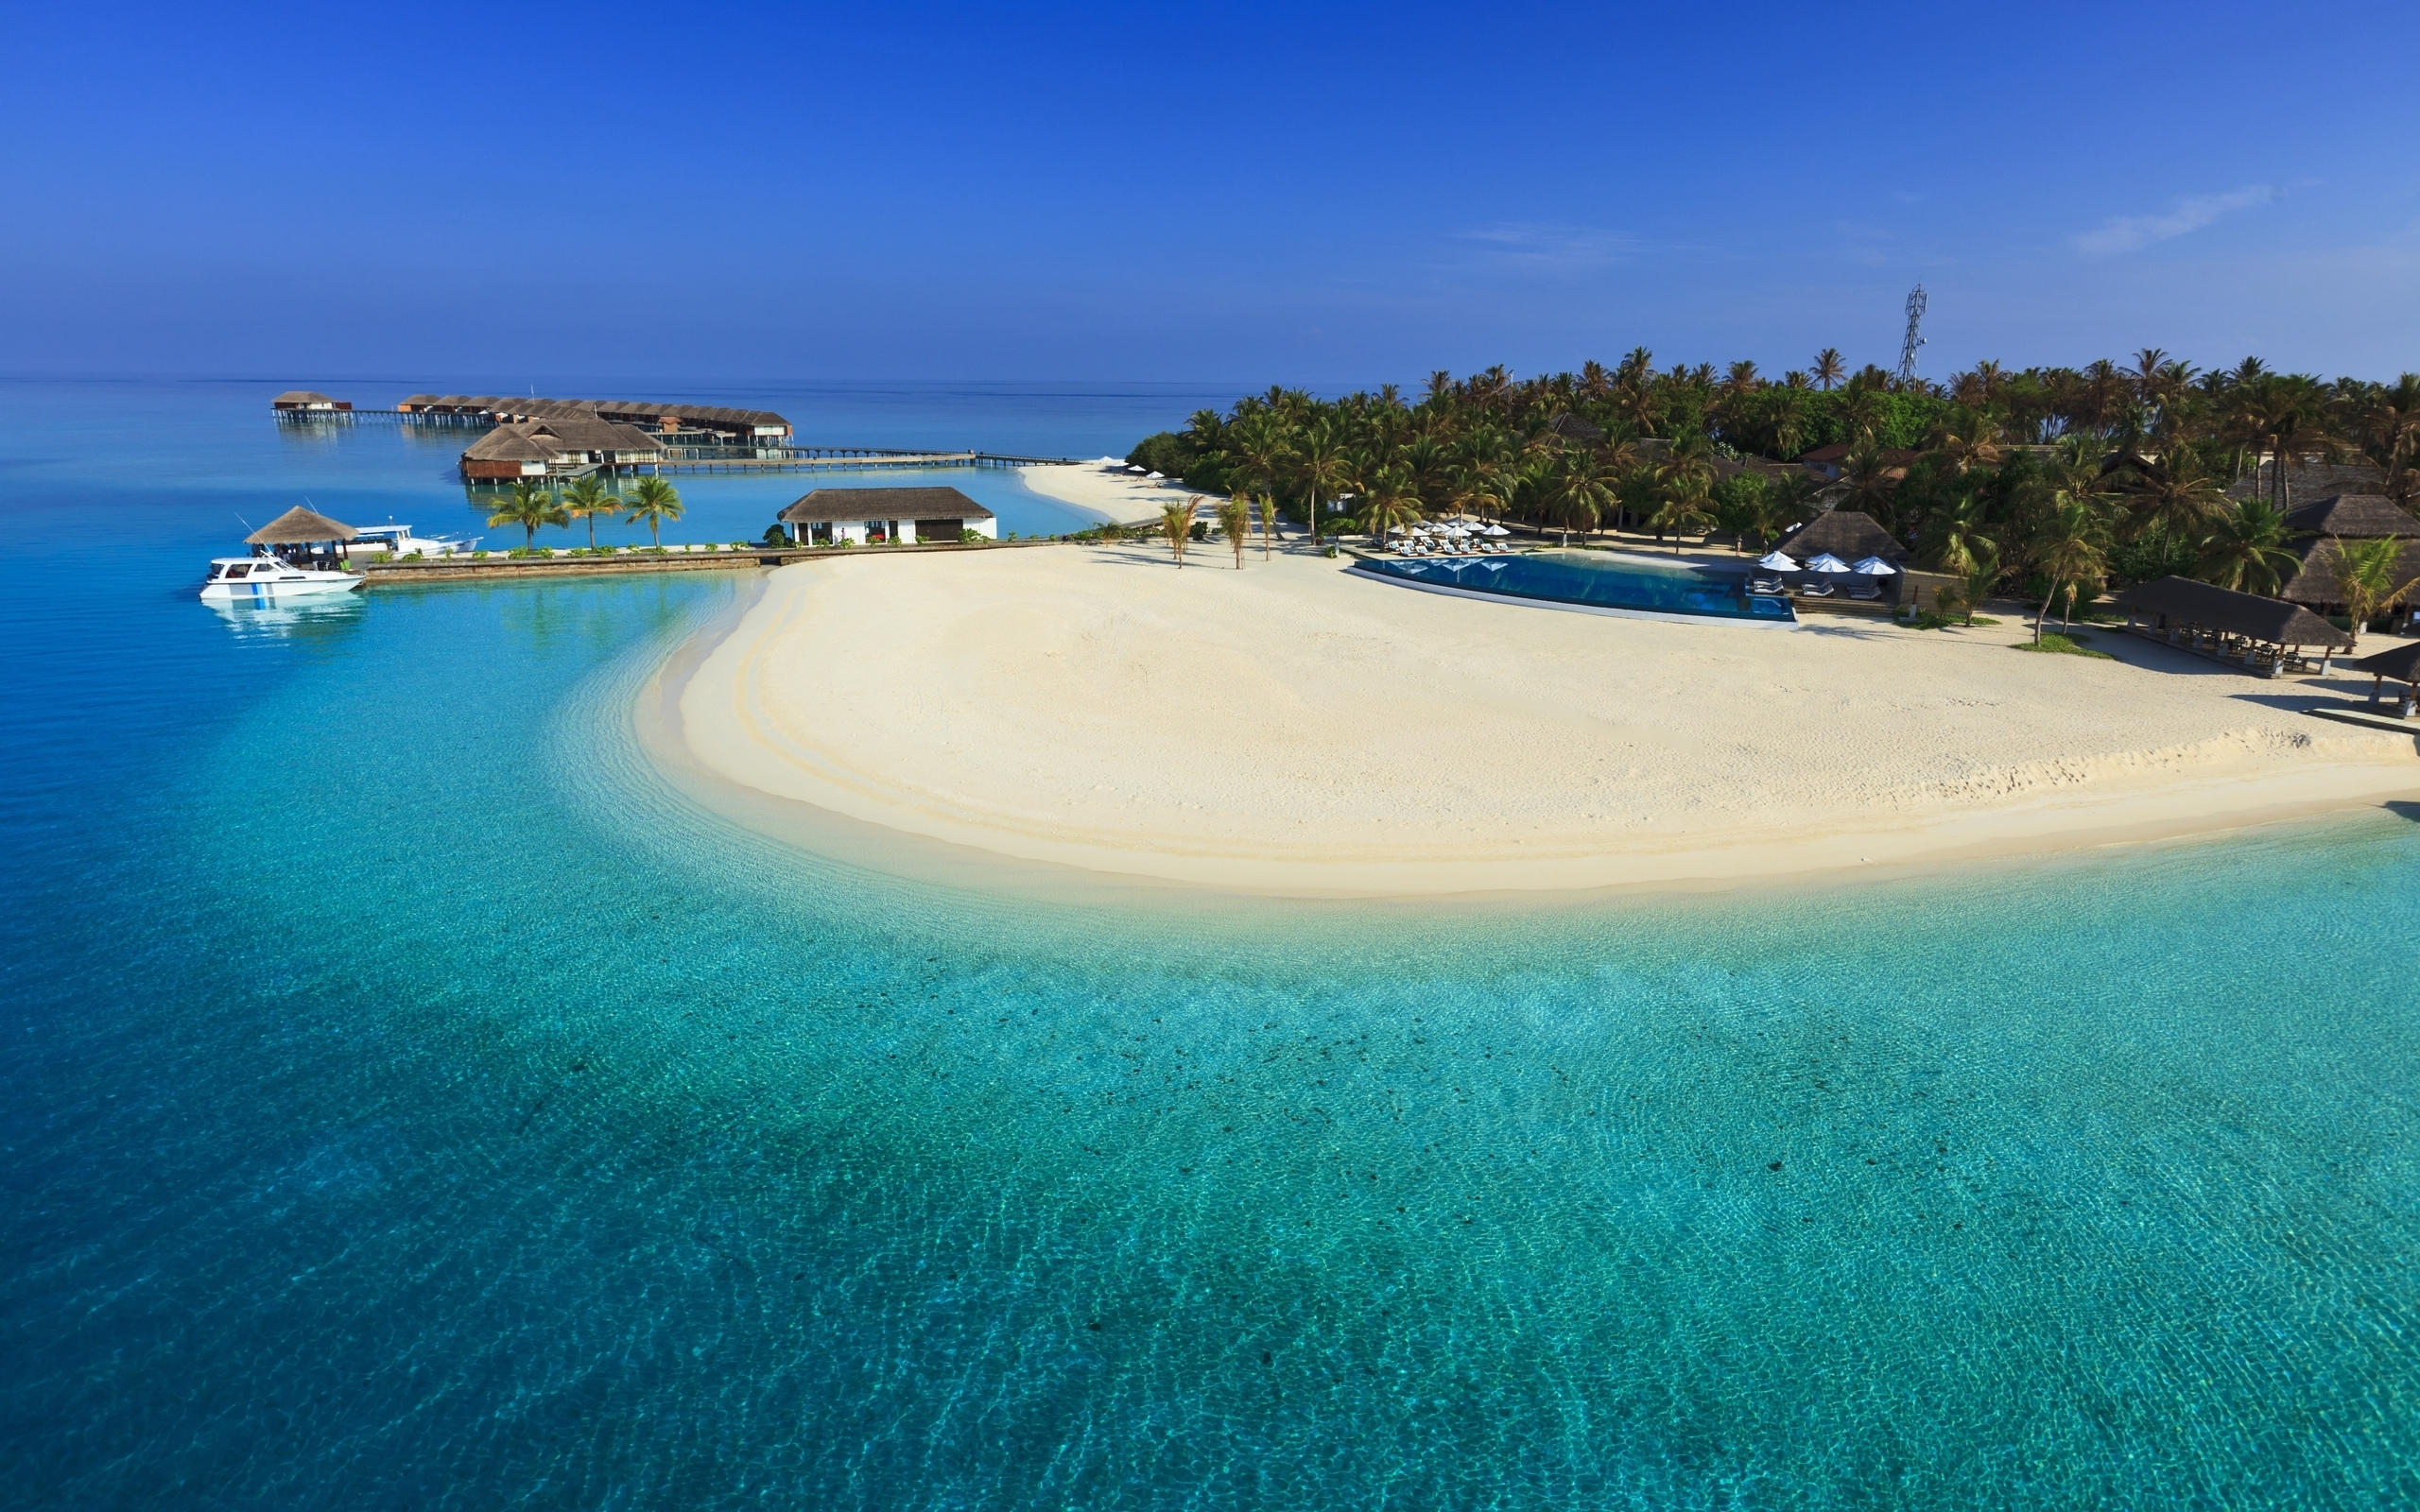 Maldives Luxury Resort for 2560 x 1600 widescreen resolution